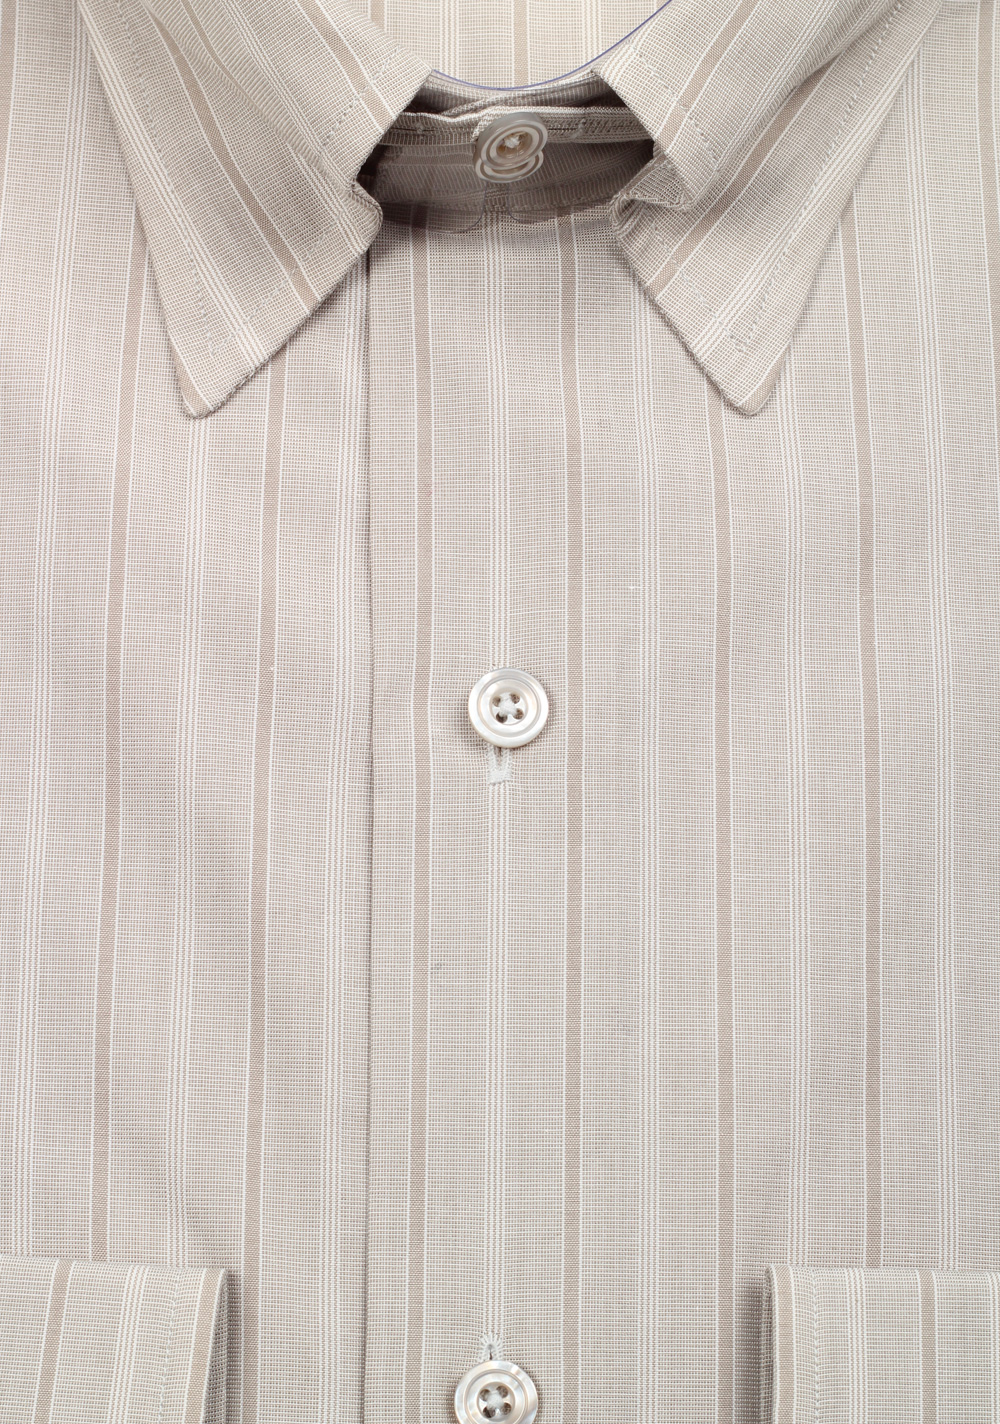 TOM FORD Striped Grayish Beige High Collar Dress Shirt Size 40 / 15,75 U.S. | Costume Limité